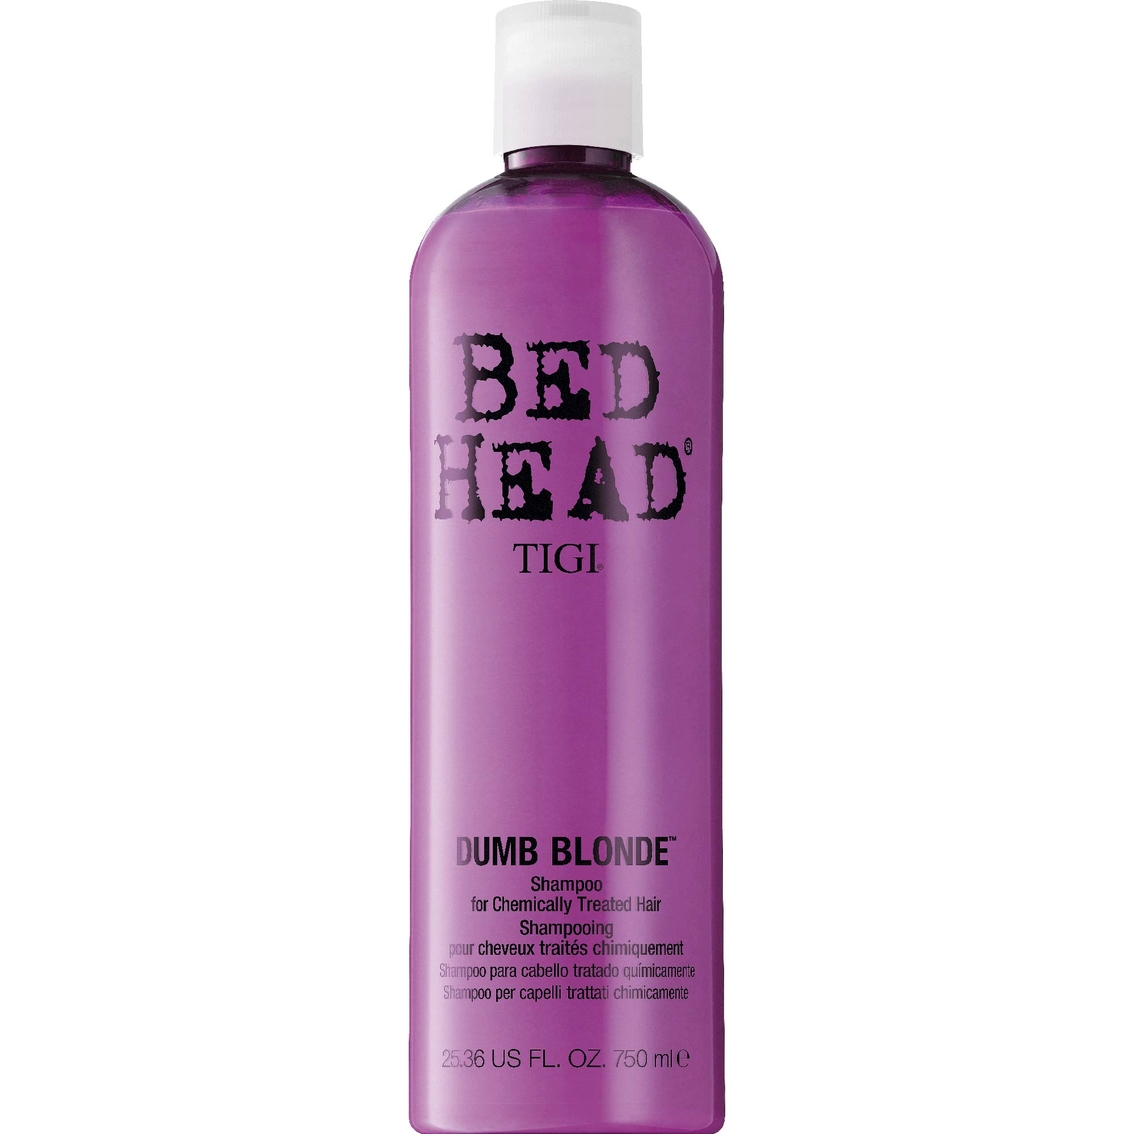 TIGI Bed Head Dumb Blonde Shampoo 13.5 oz. - Image 2 of 2